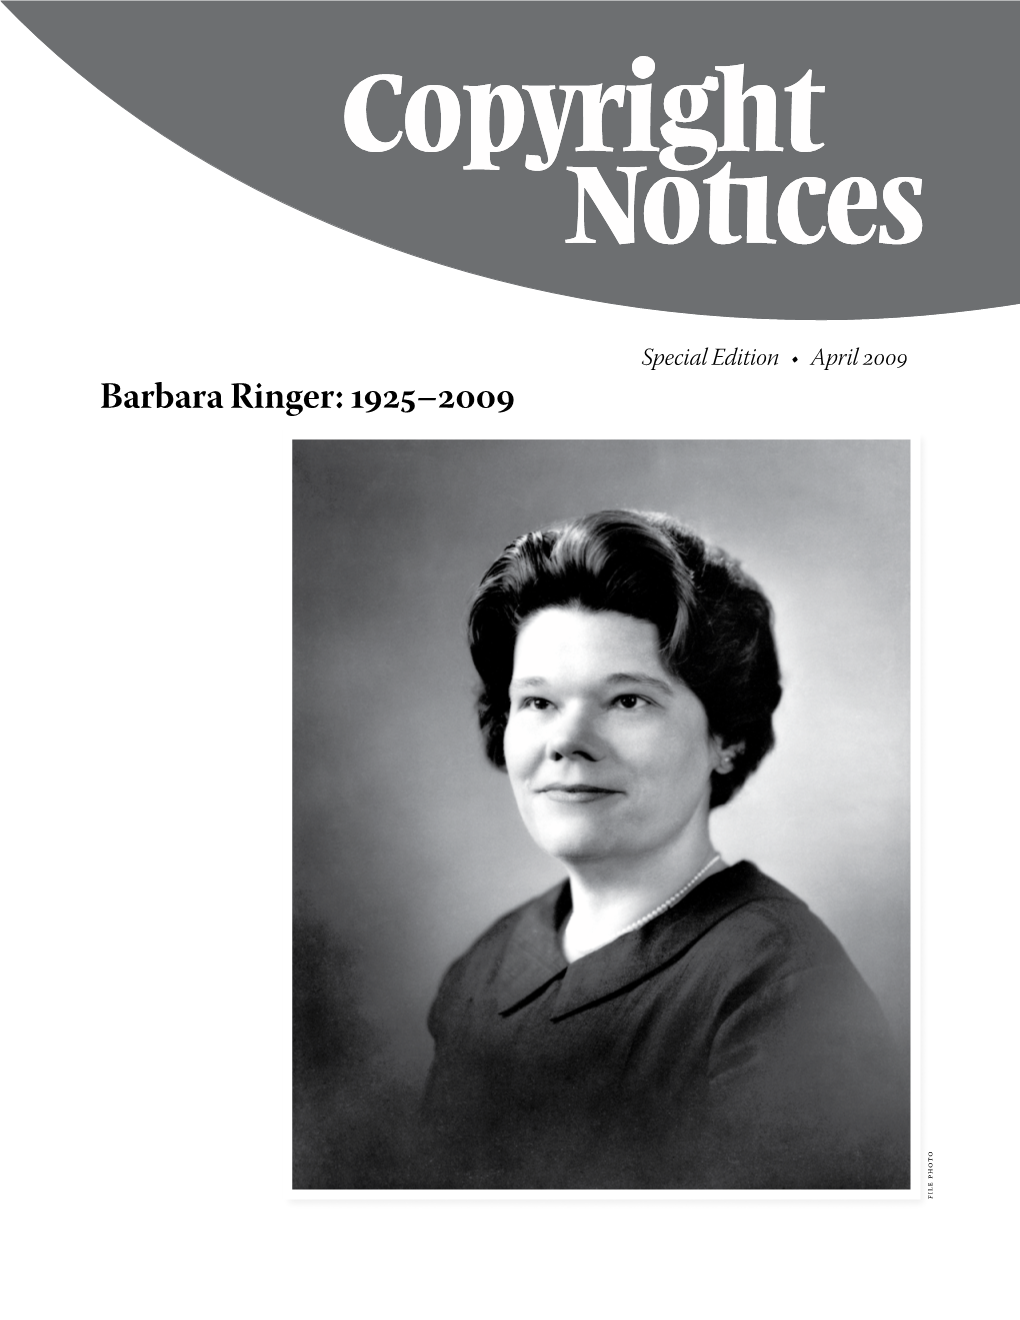 Barbara Ringer: 1925–2009Ringer: Barbara a Special Special Edition • April 2009